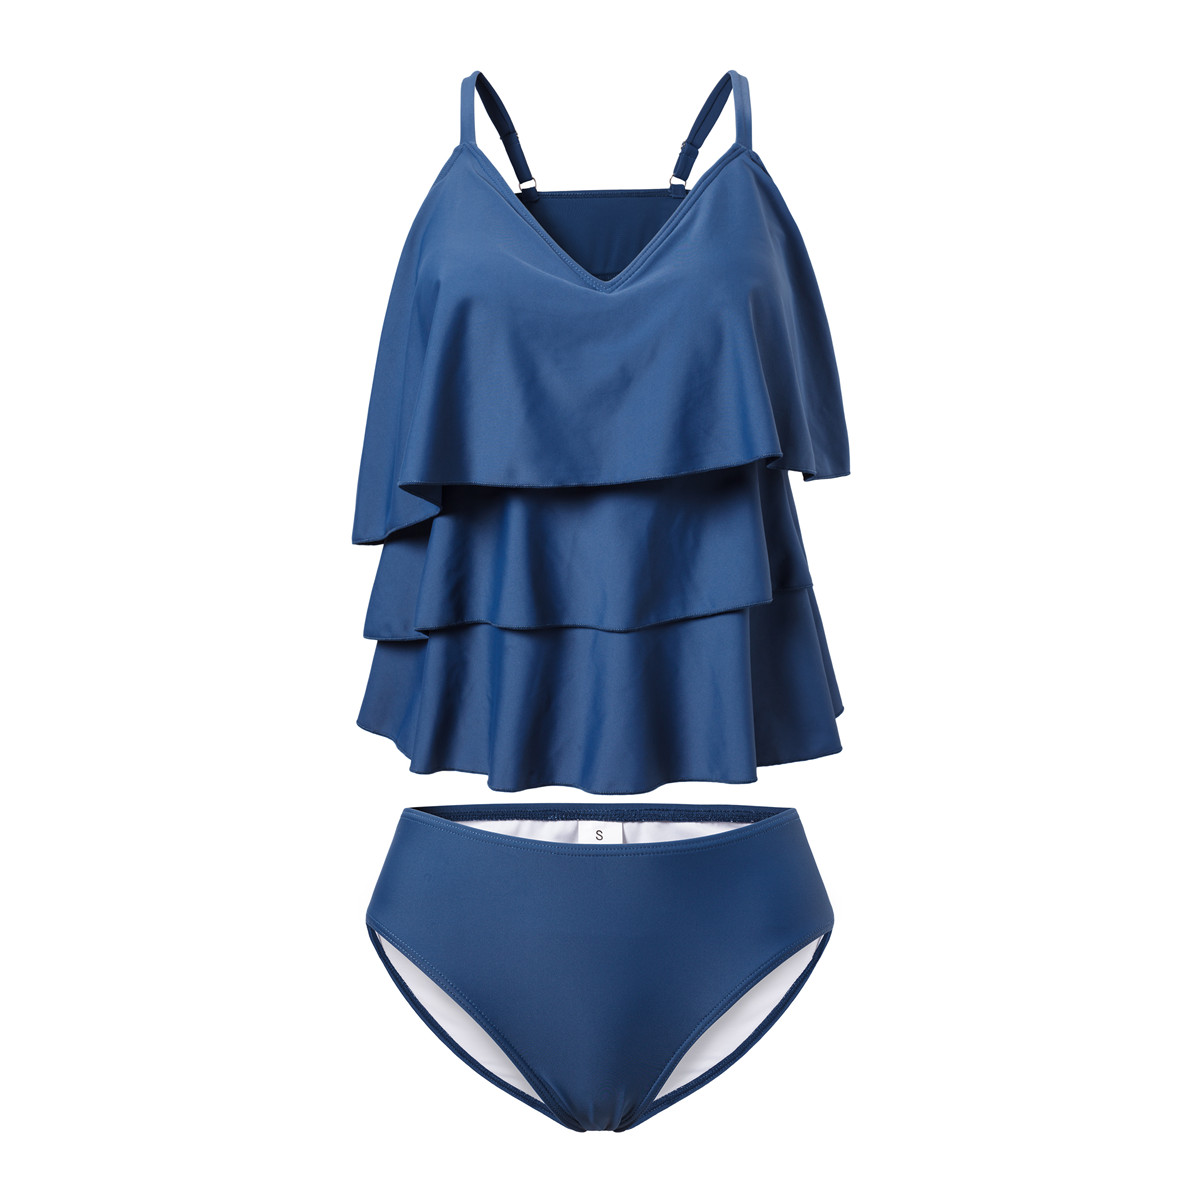 FC Sports Swimwear Tankini Two Piece Bathing Suits for Women V Neck Swimsuit Beach Summer Sexy Wear